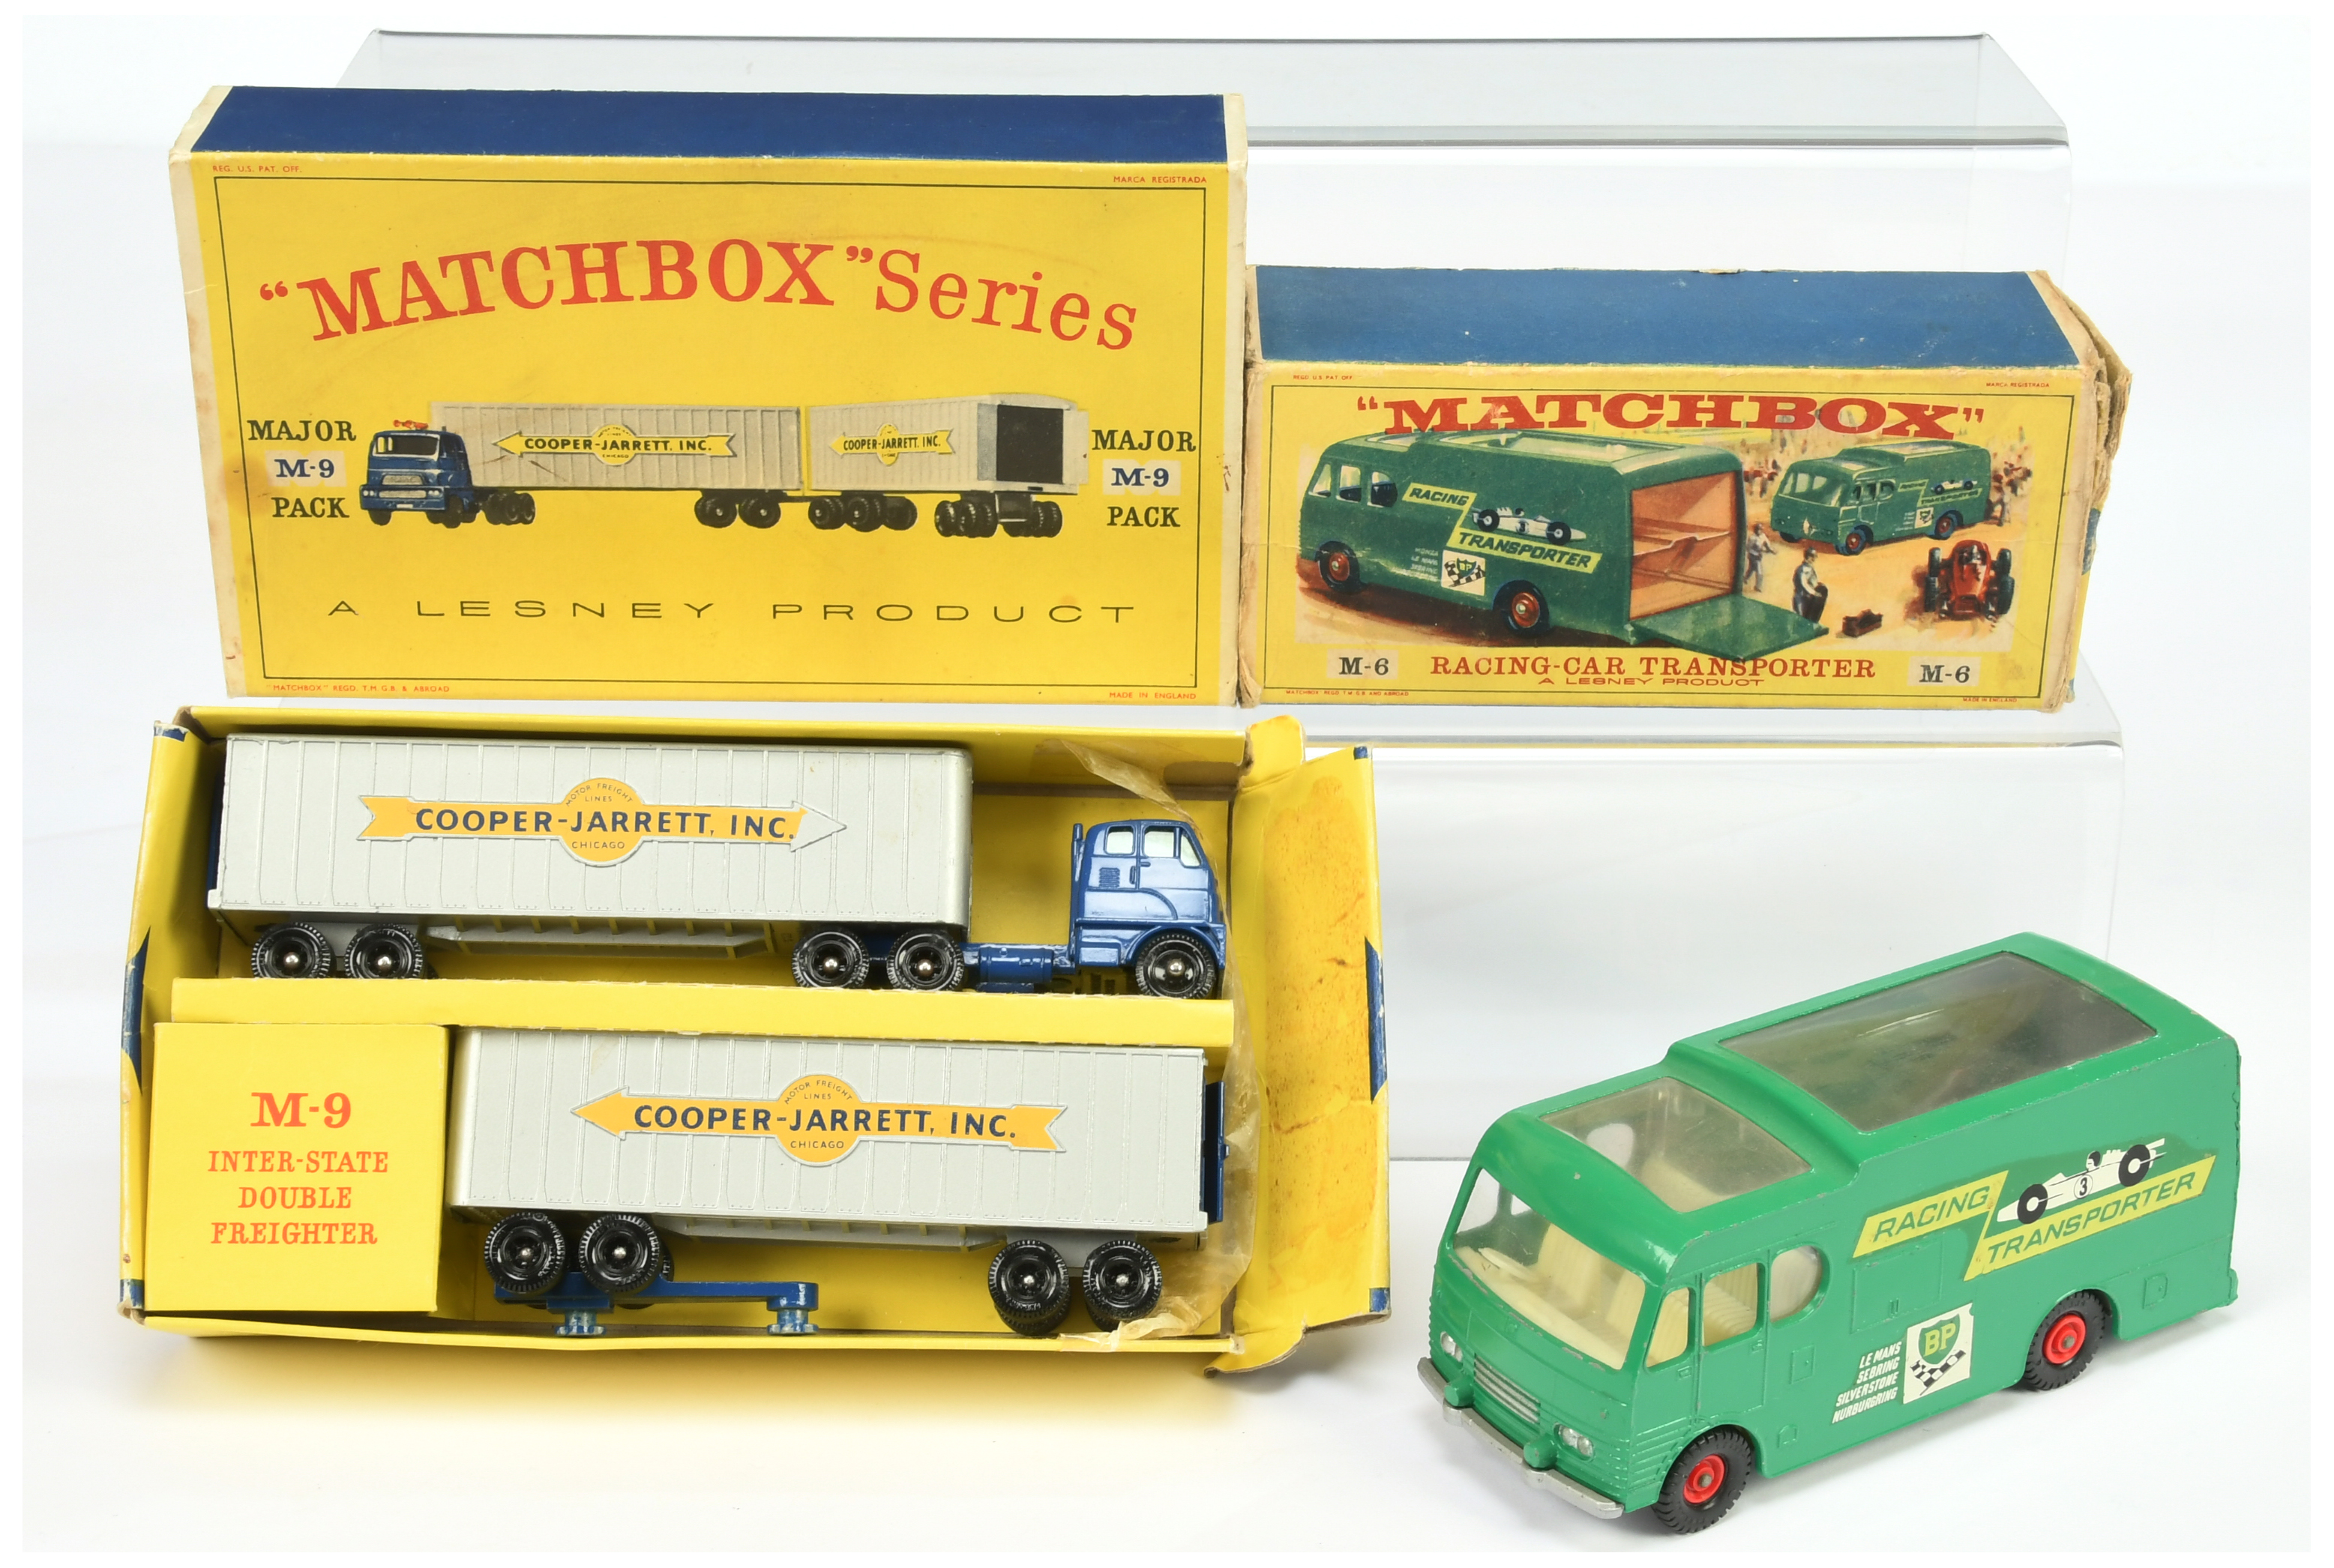 Matchbox pair (1) Matchbox Regular Wheels Major Pack M9 Hendrickson Tractor Unit with Cooper Jarr...